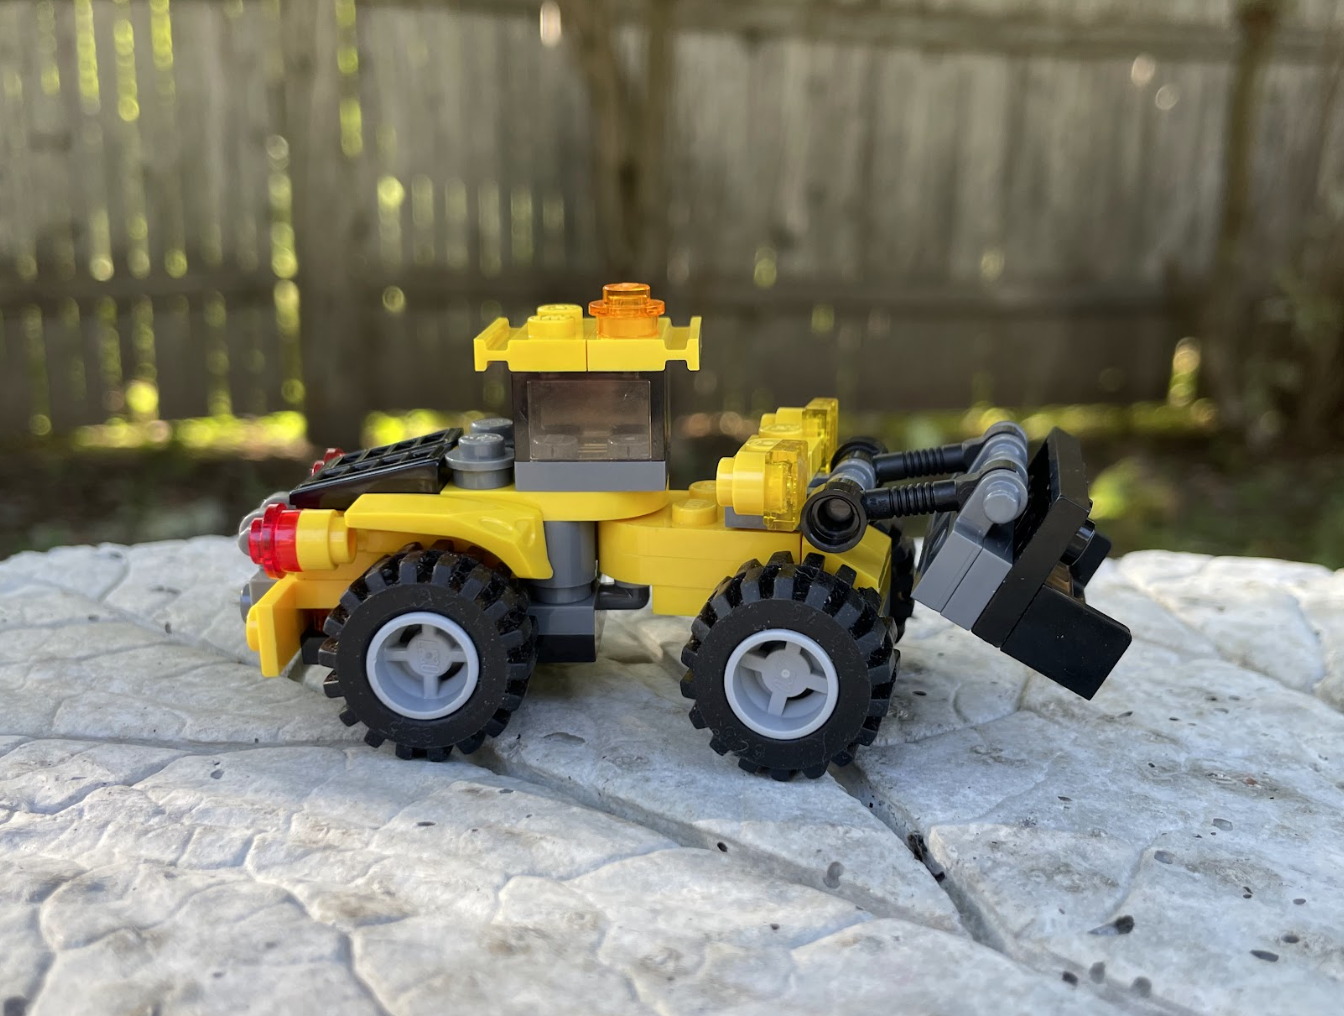 A yellow LEGO construction digger